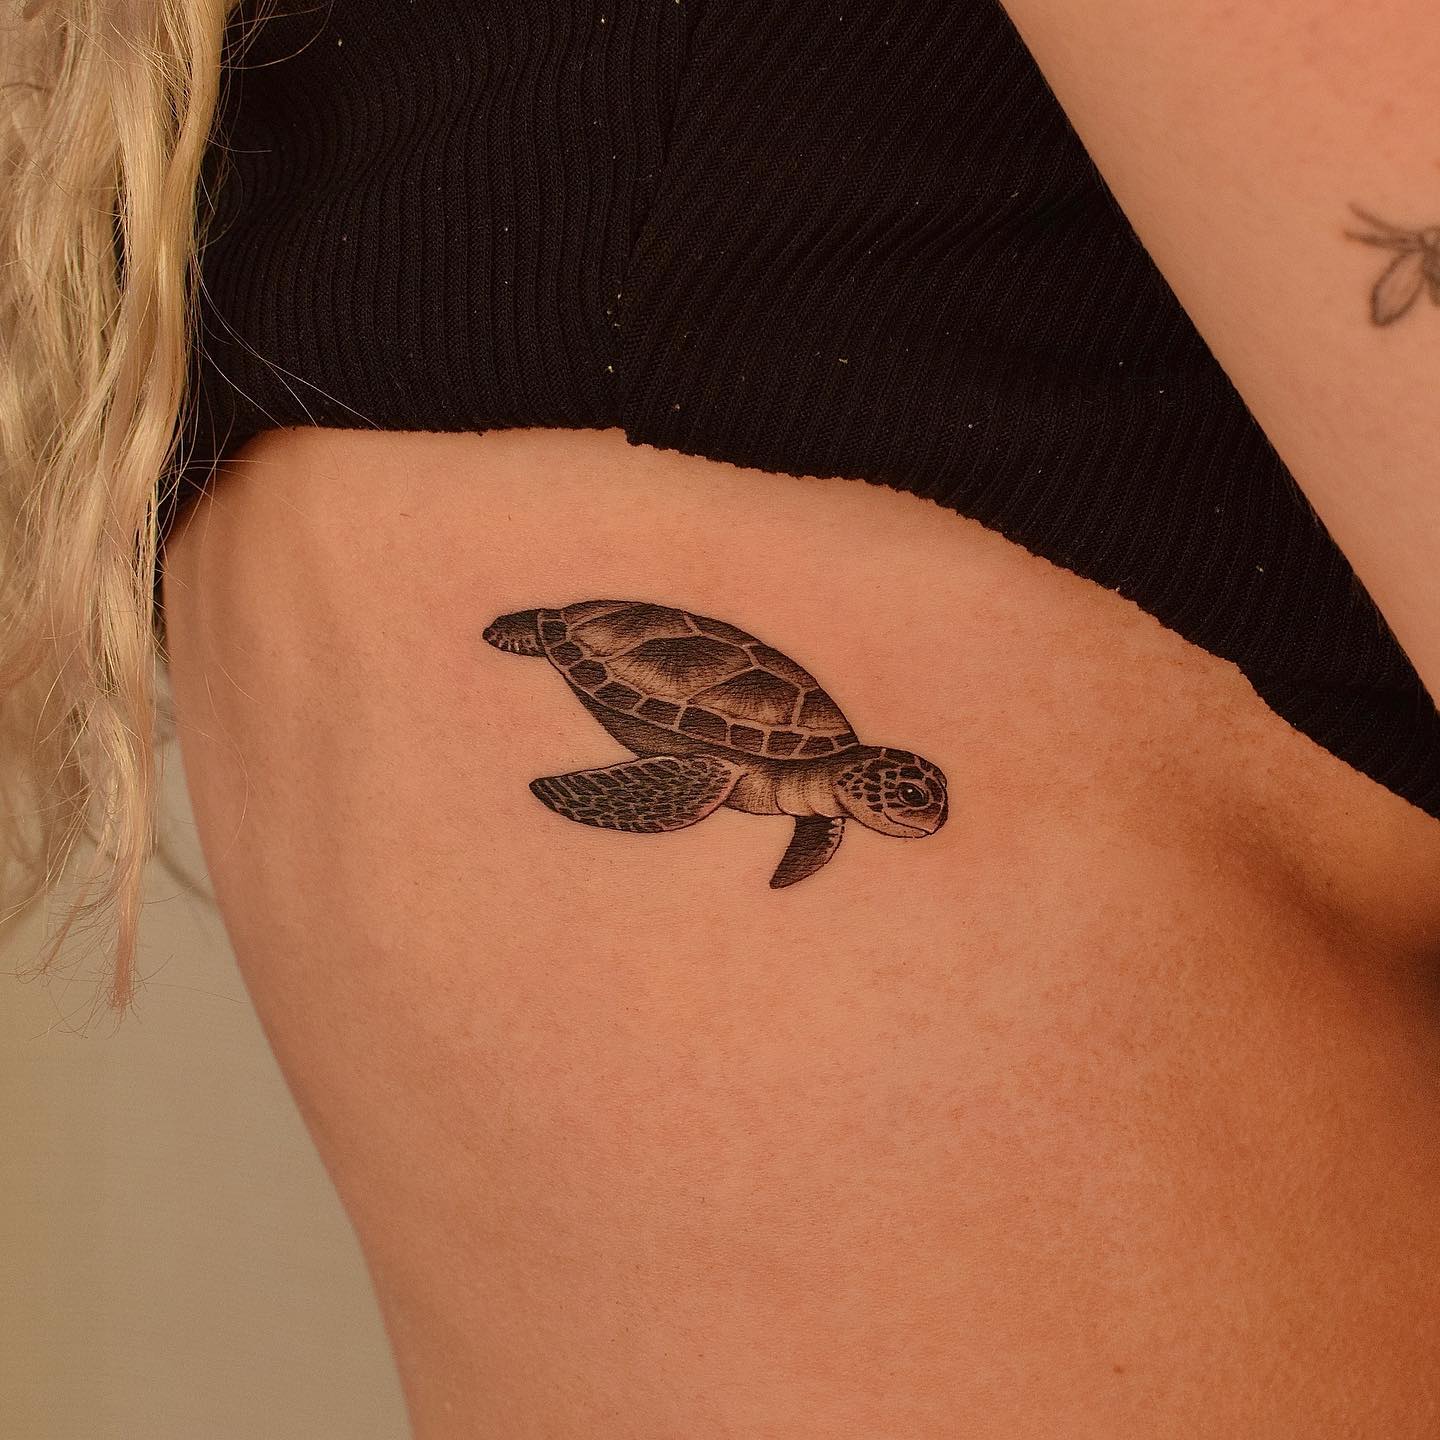 Illustrative style sea turtle tattoo on the ribs